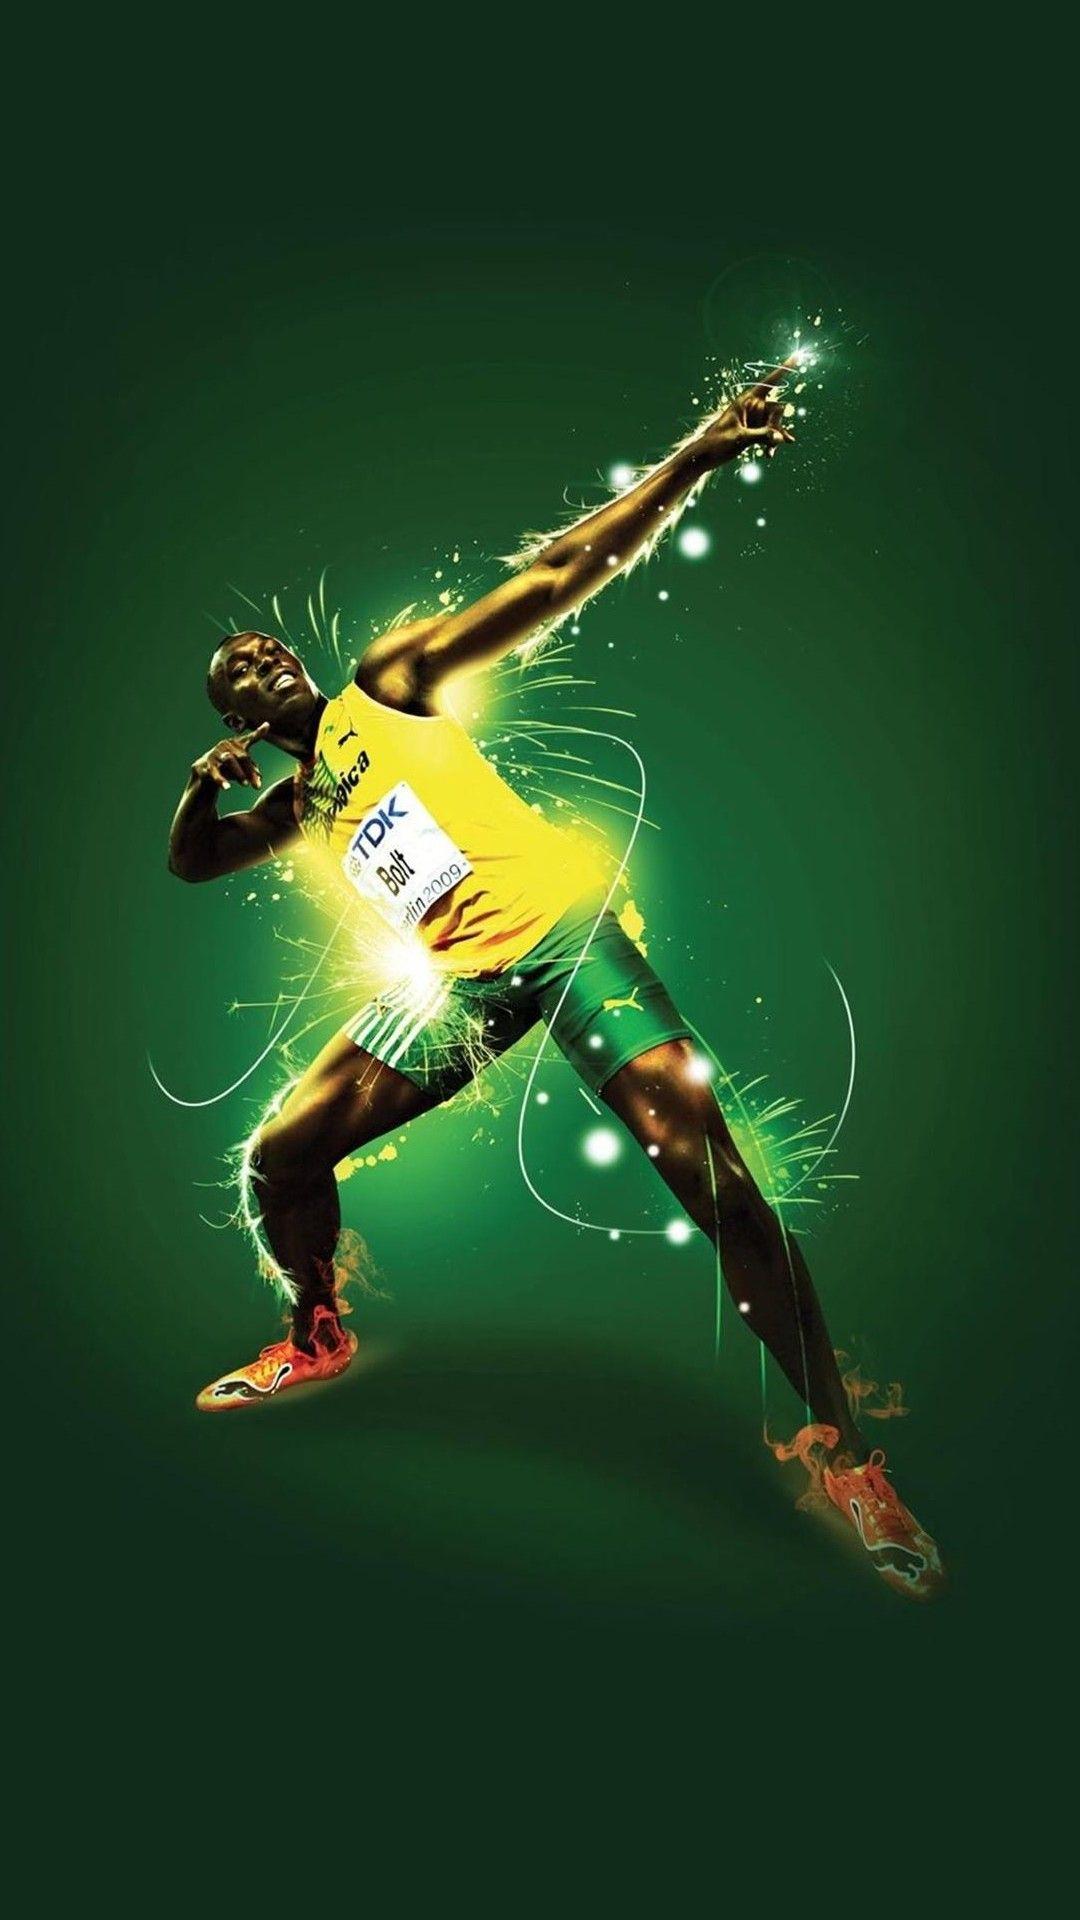 Usain Bolt Wallpaper for iPhone iPhone 7 plus, iPhone 6 plus